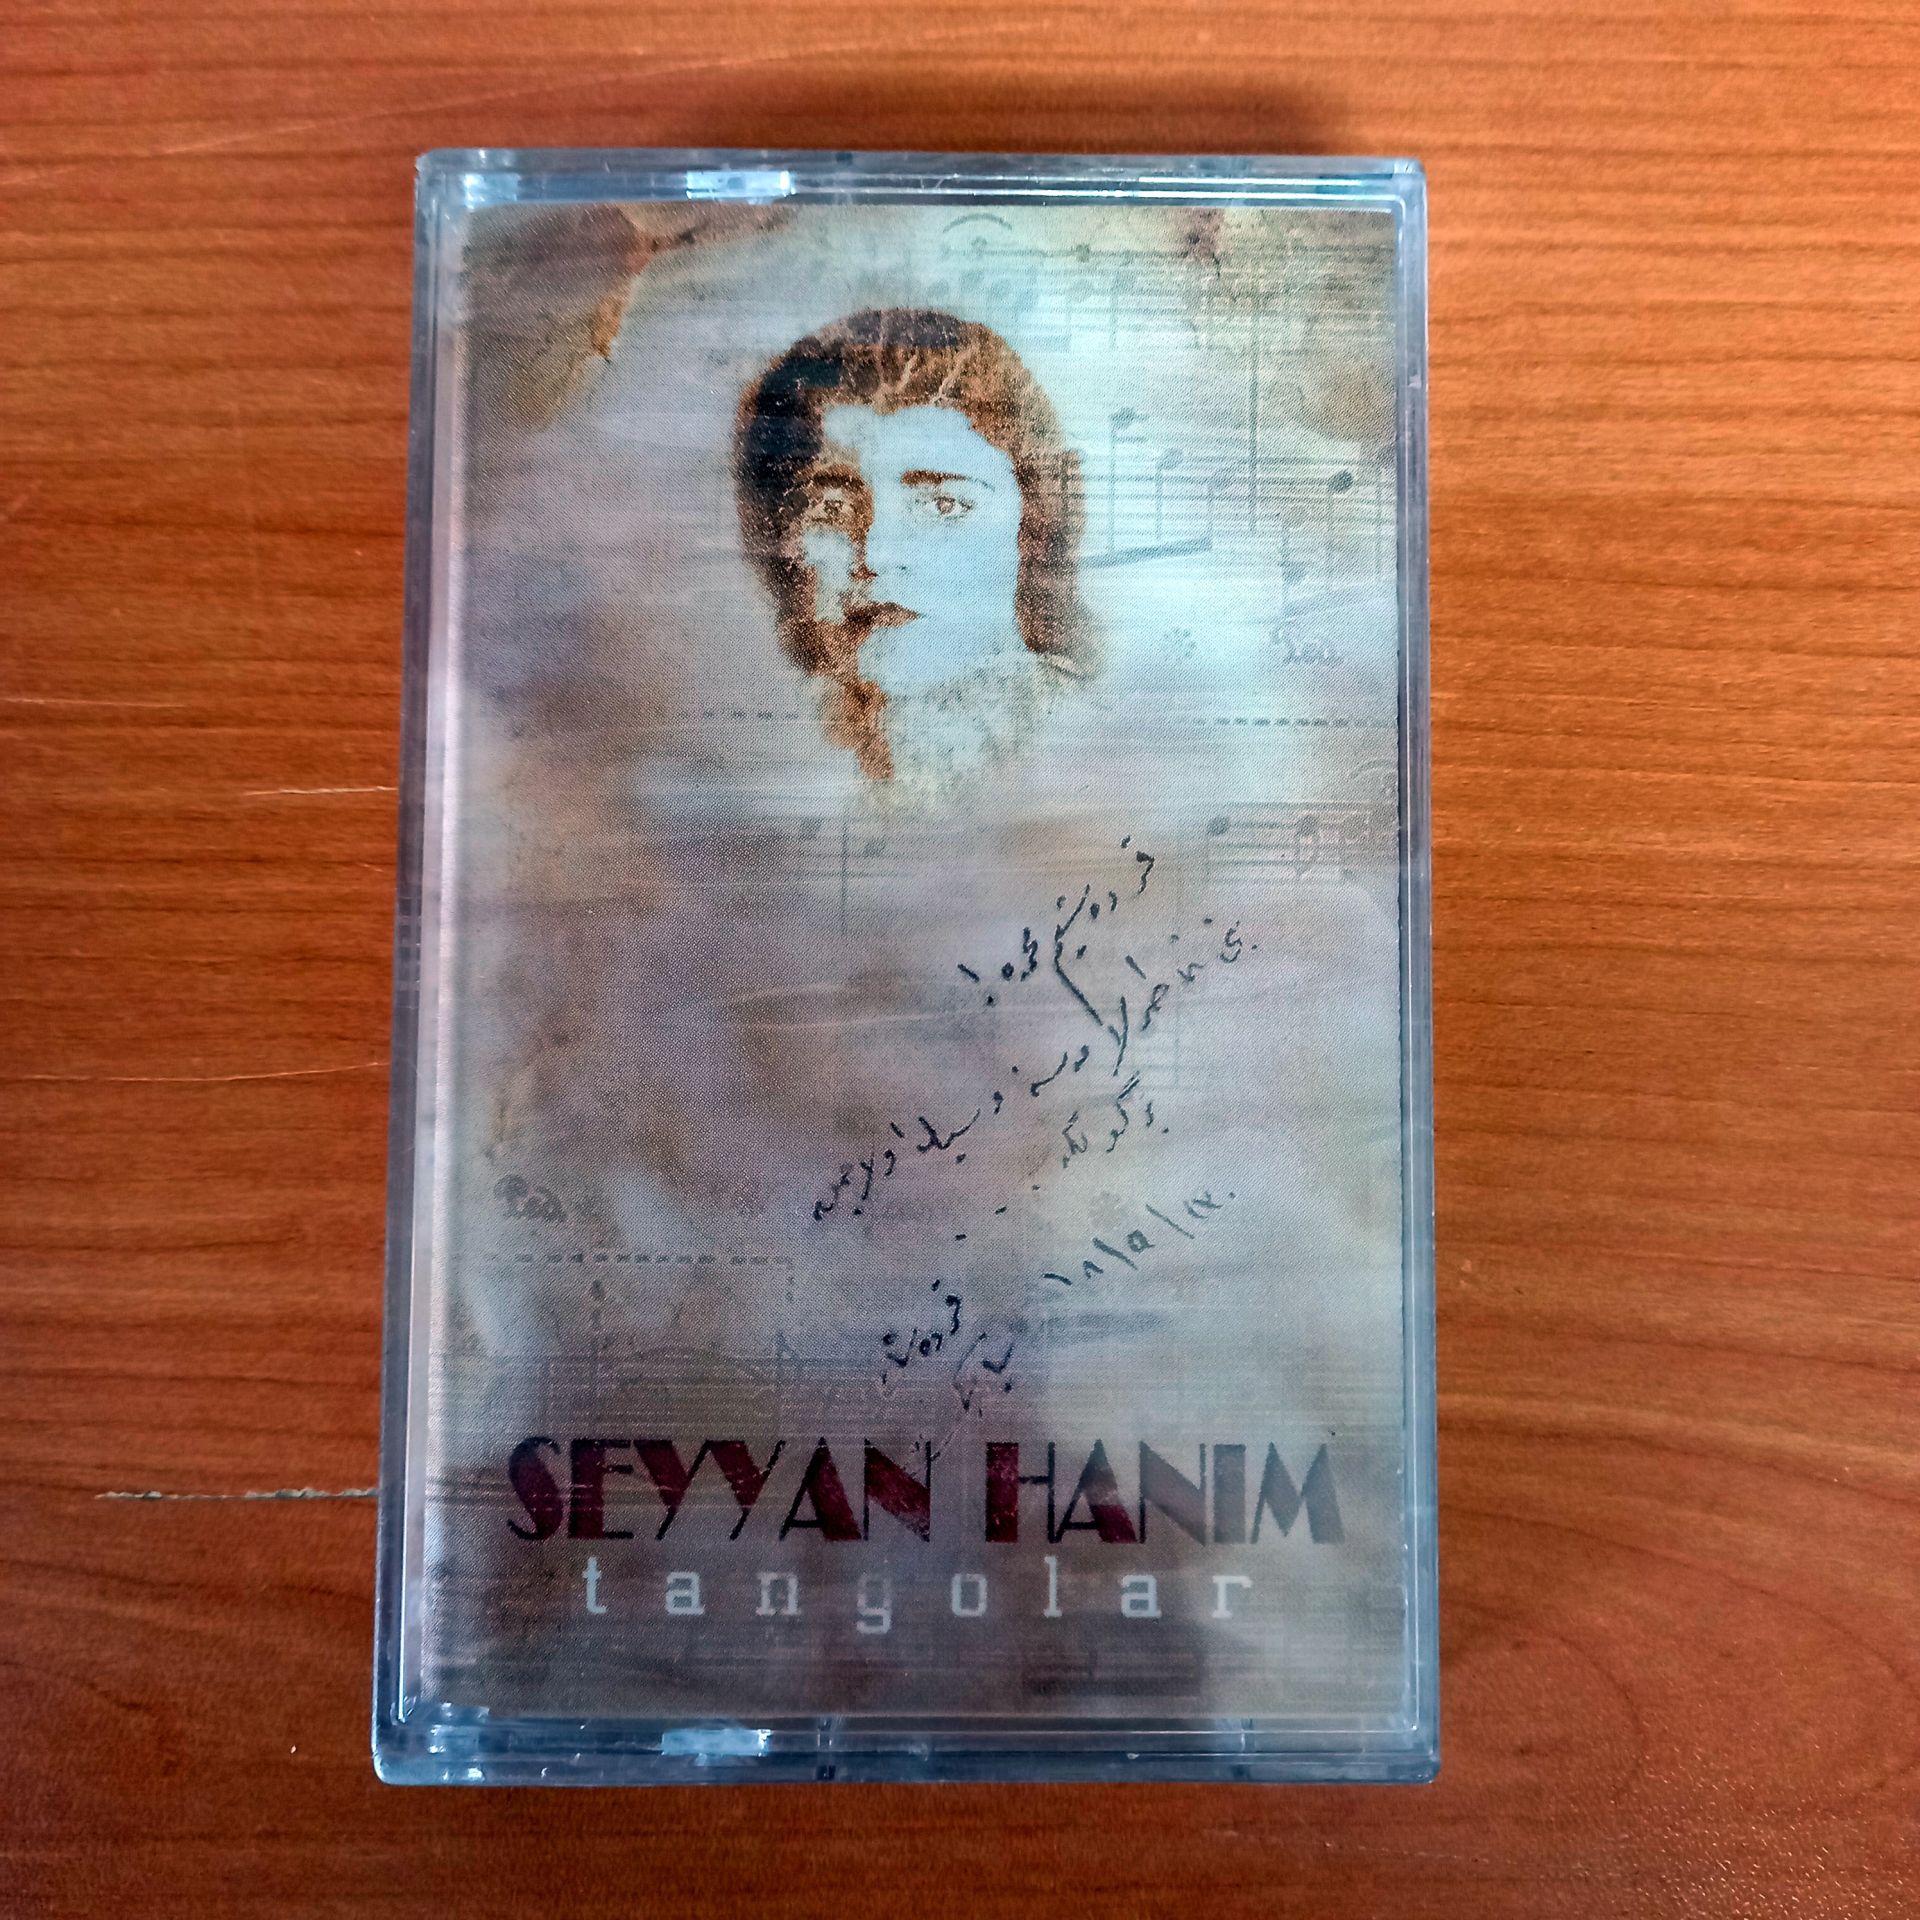 SEYYAN HANIM - TANGOLAR (1996) - KASET SIFIR